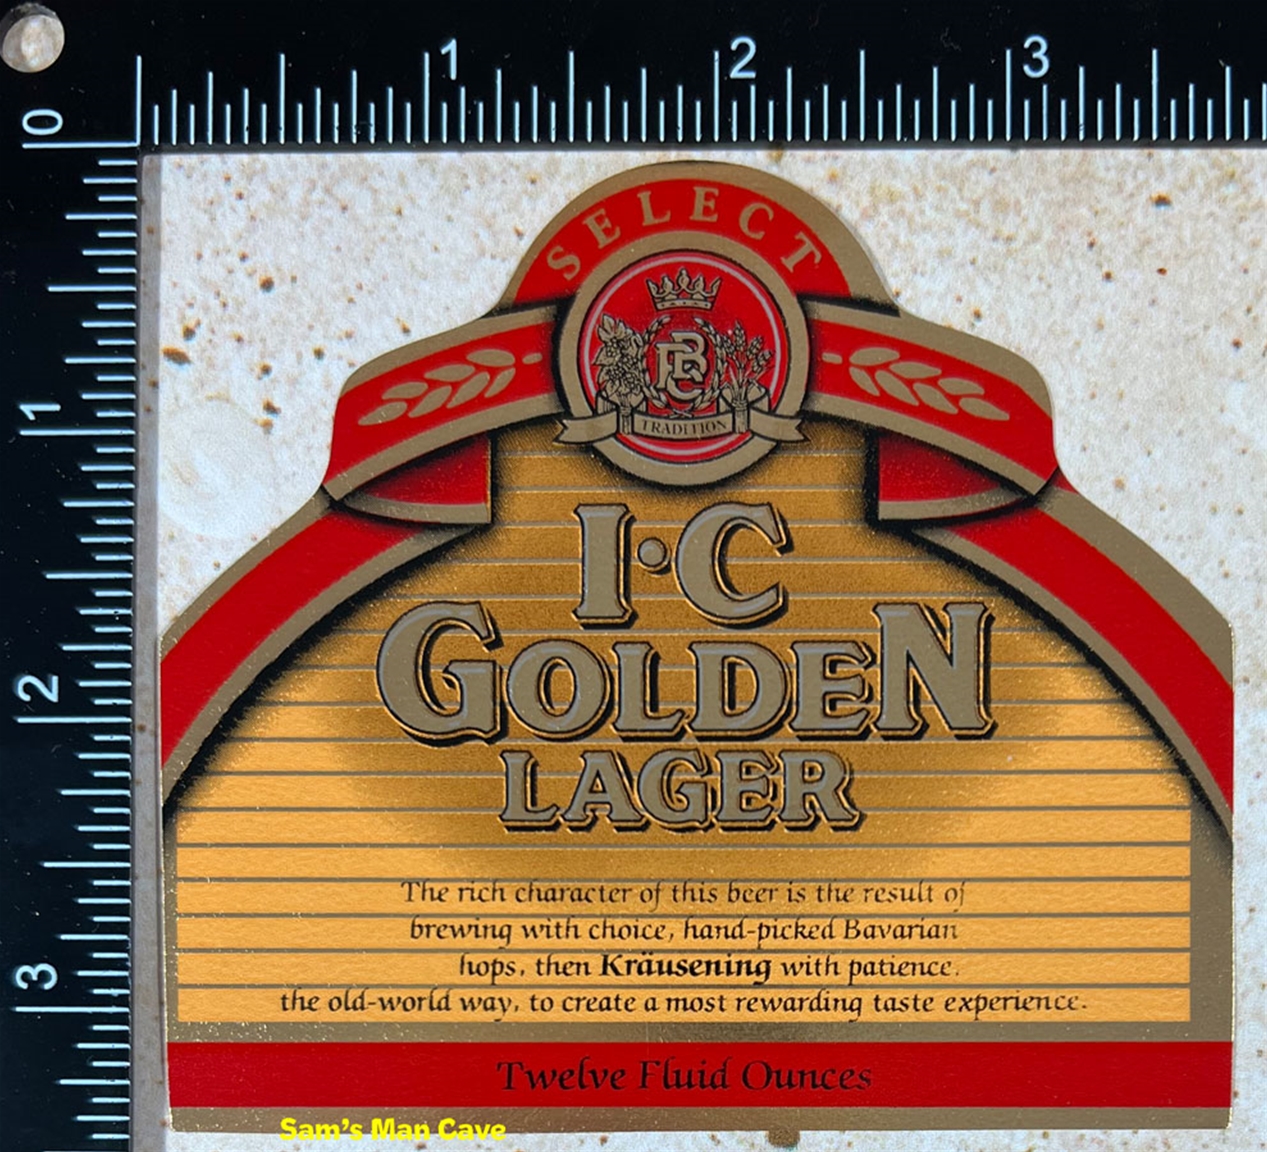 IC Golden Lager Beer Label